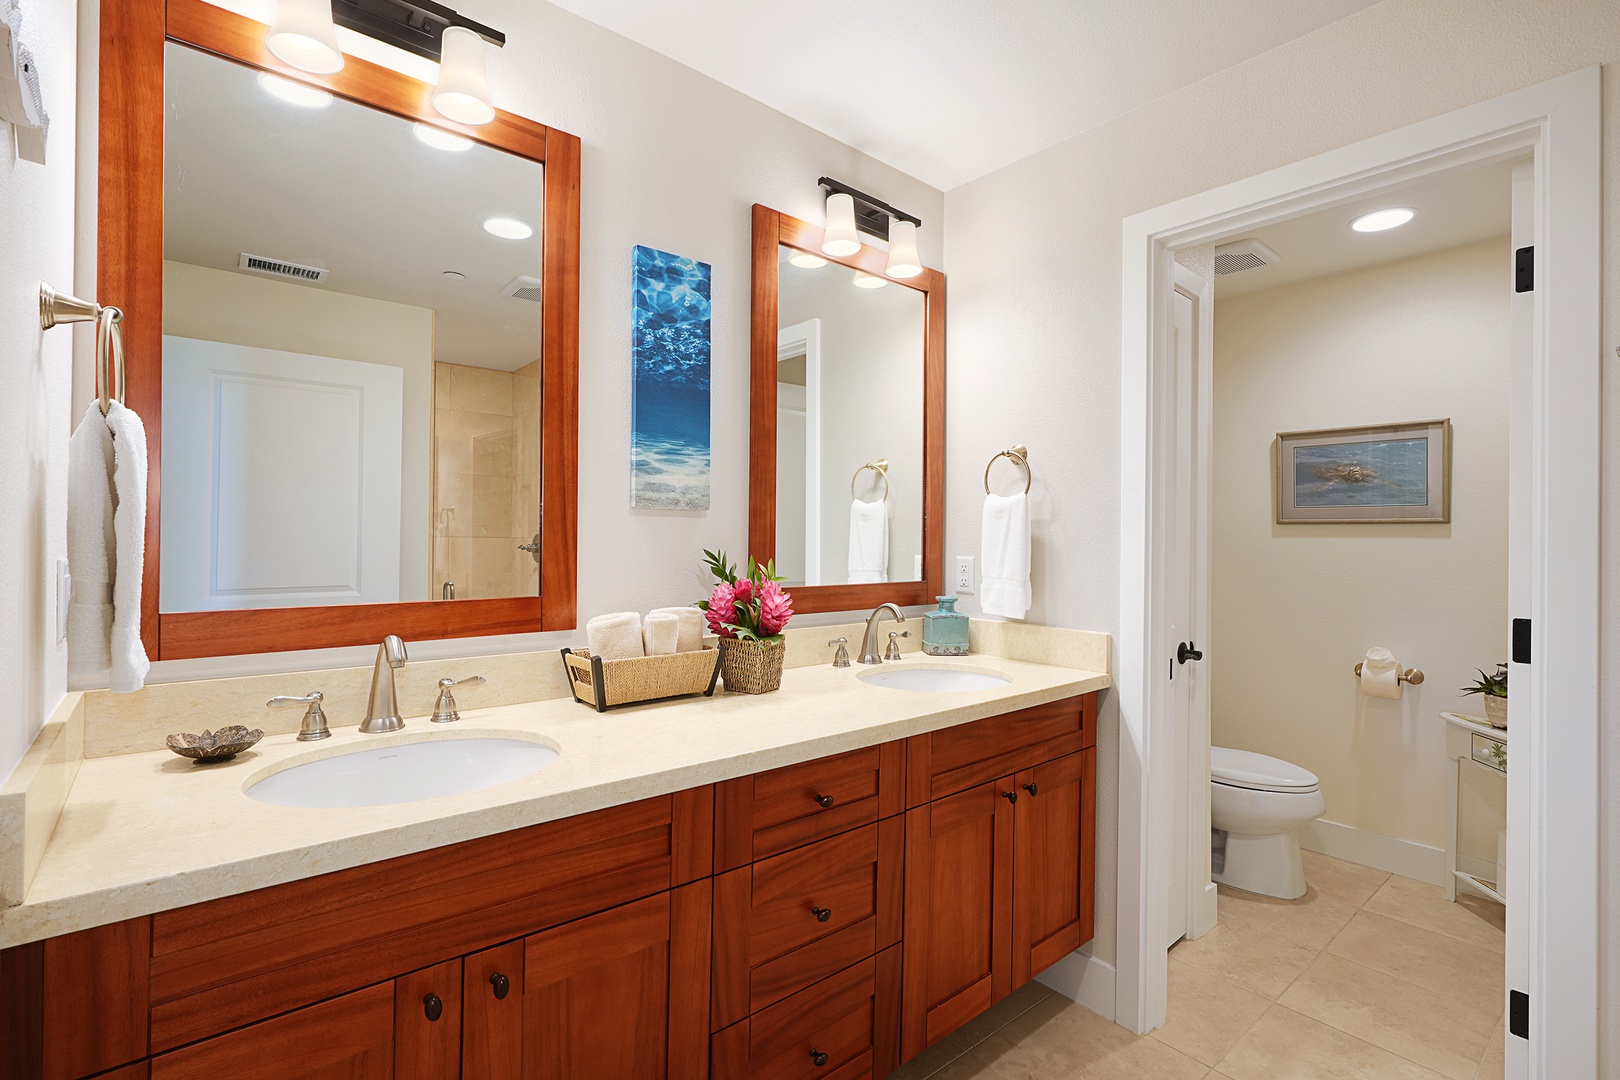 Koloa Vacation Rentals, Pili Mai 7J - Ensuite bathroom with dual vanity and ample storage.